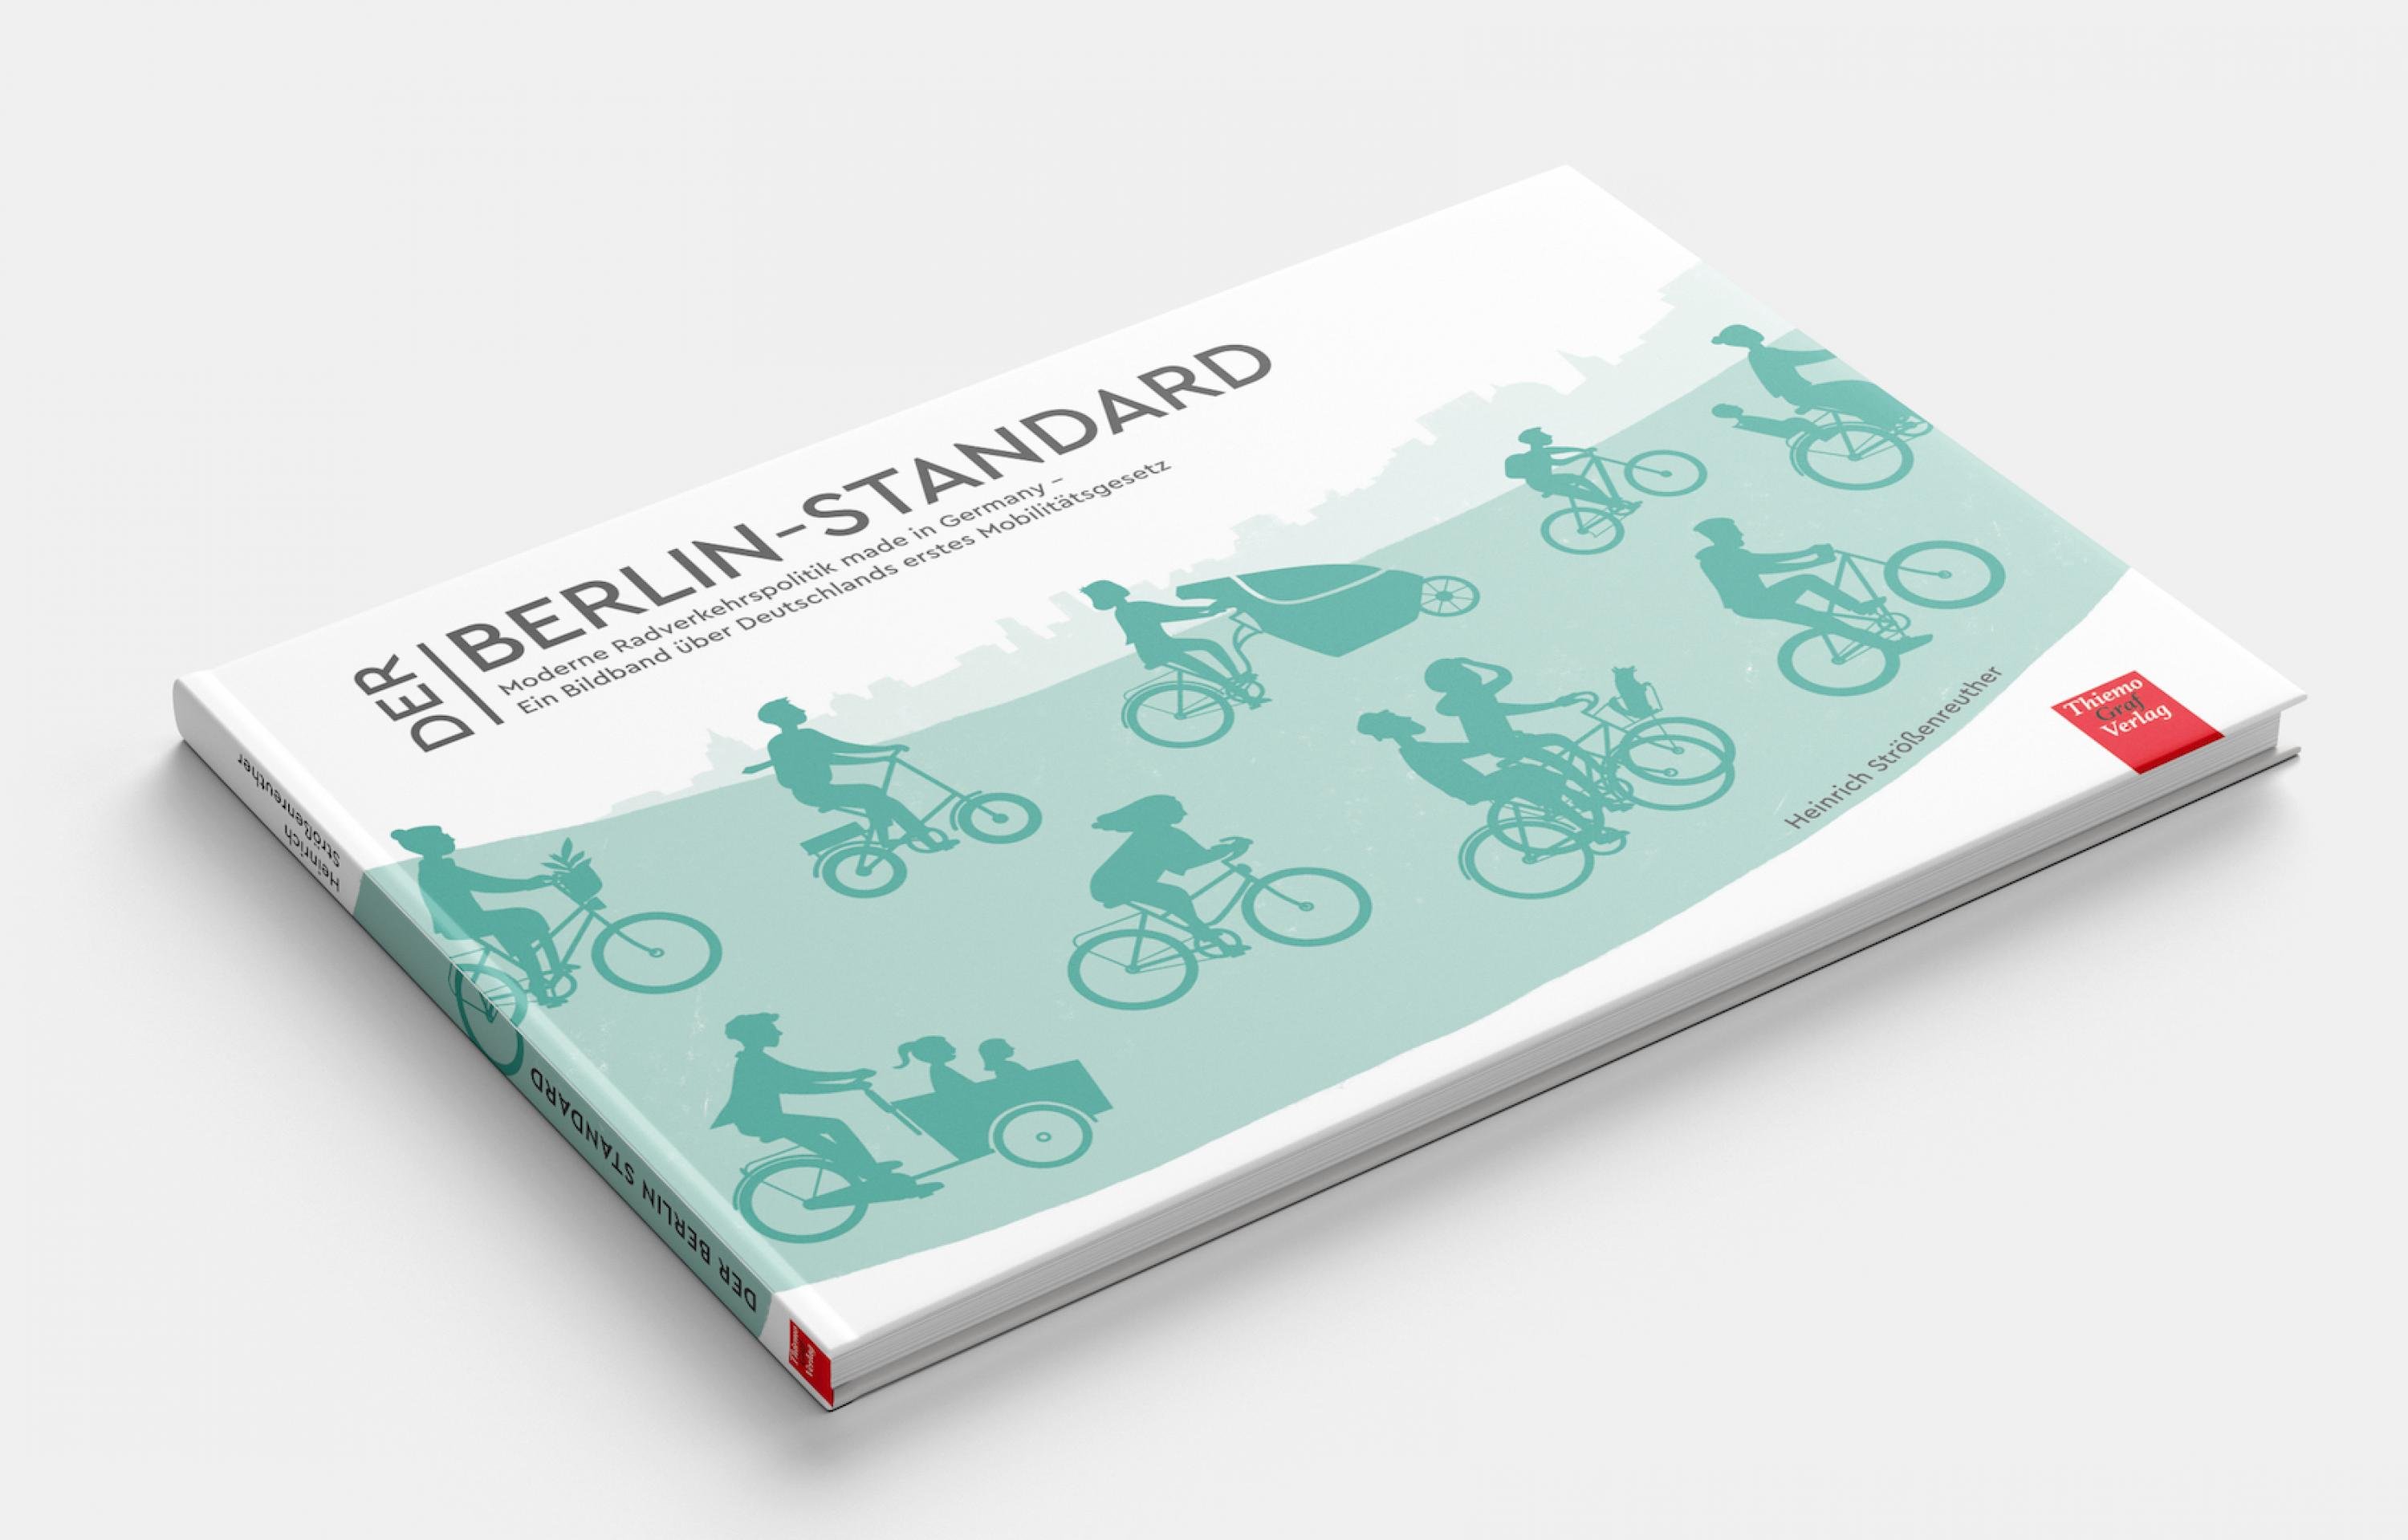 Das Buch „Der Berlin-Standard“